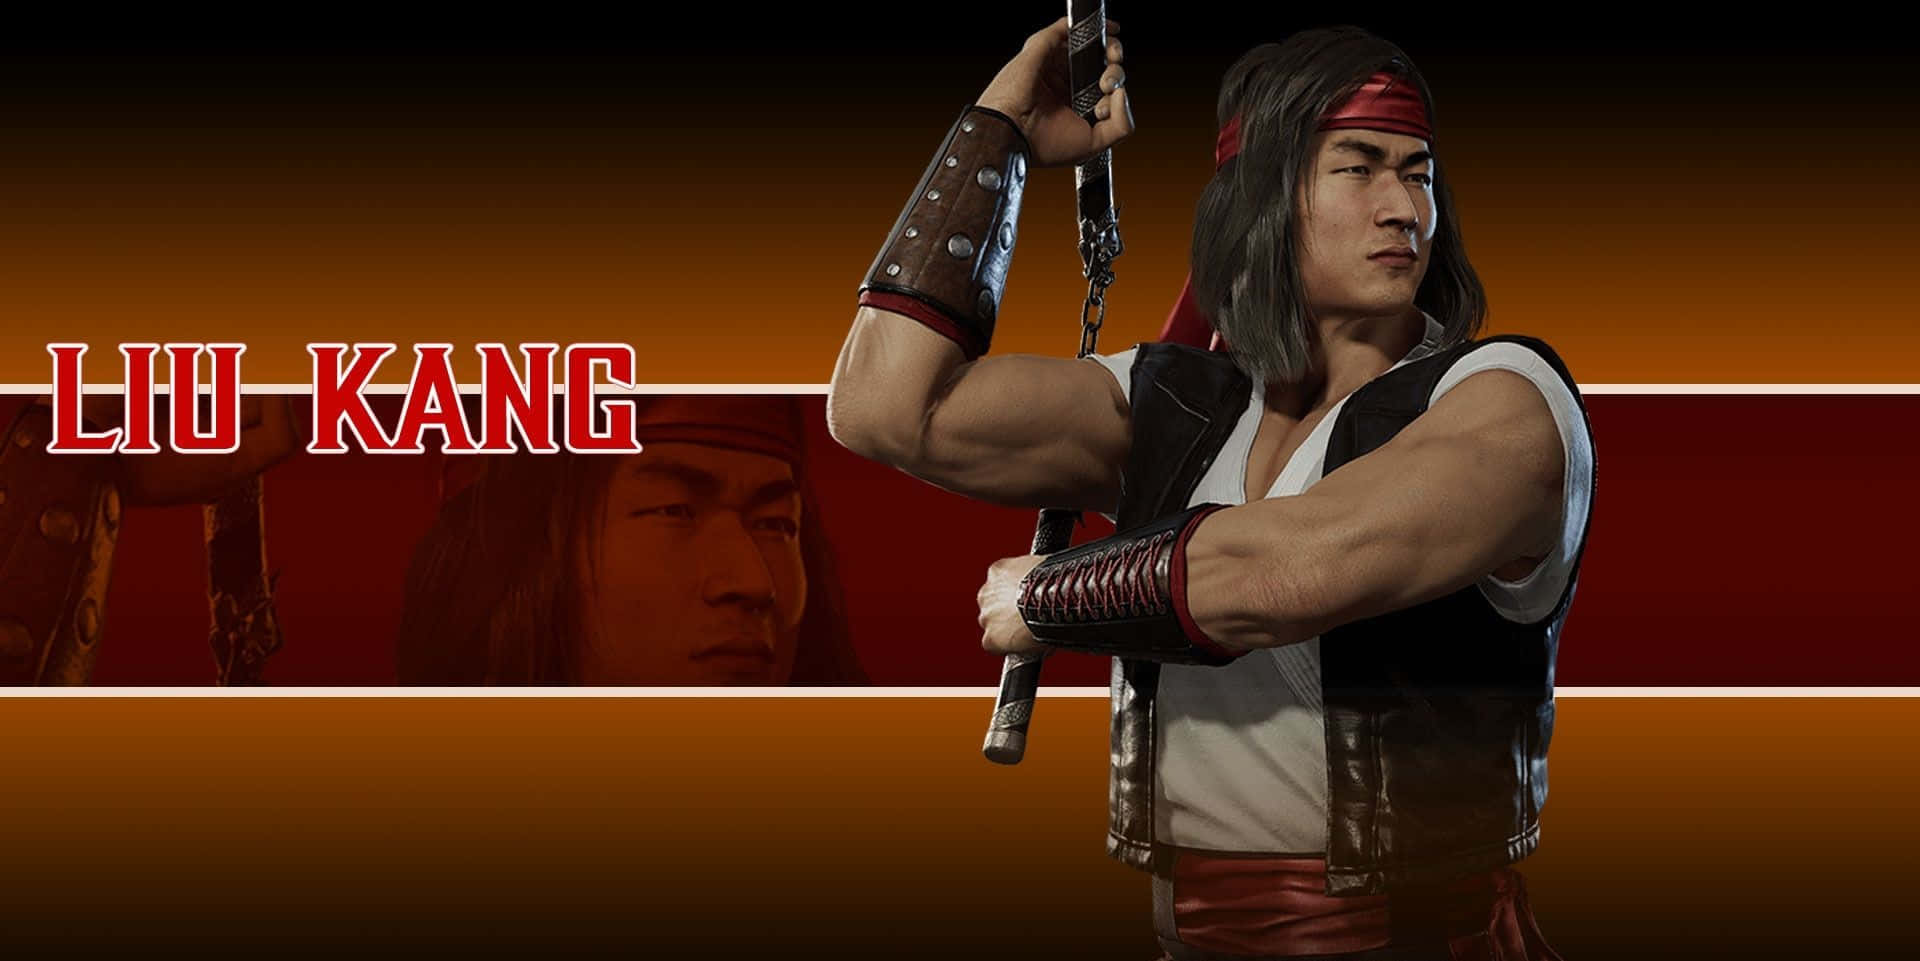 Liukang Adoptando Una Pose Poderosa En Mortal Kombat. Fondo de pantalla